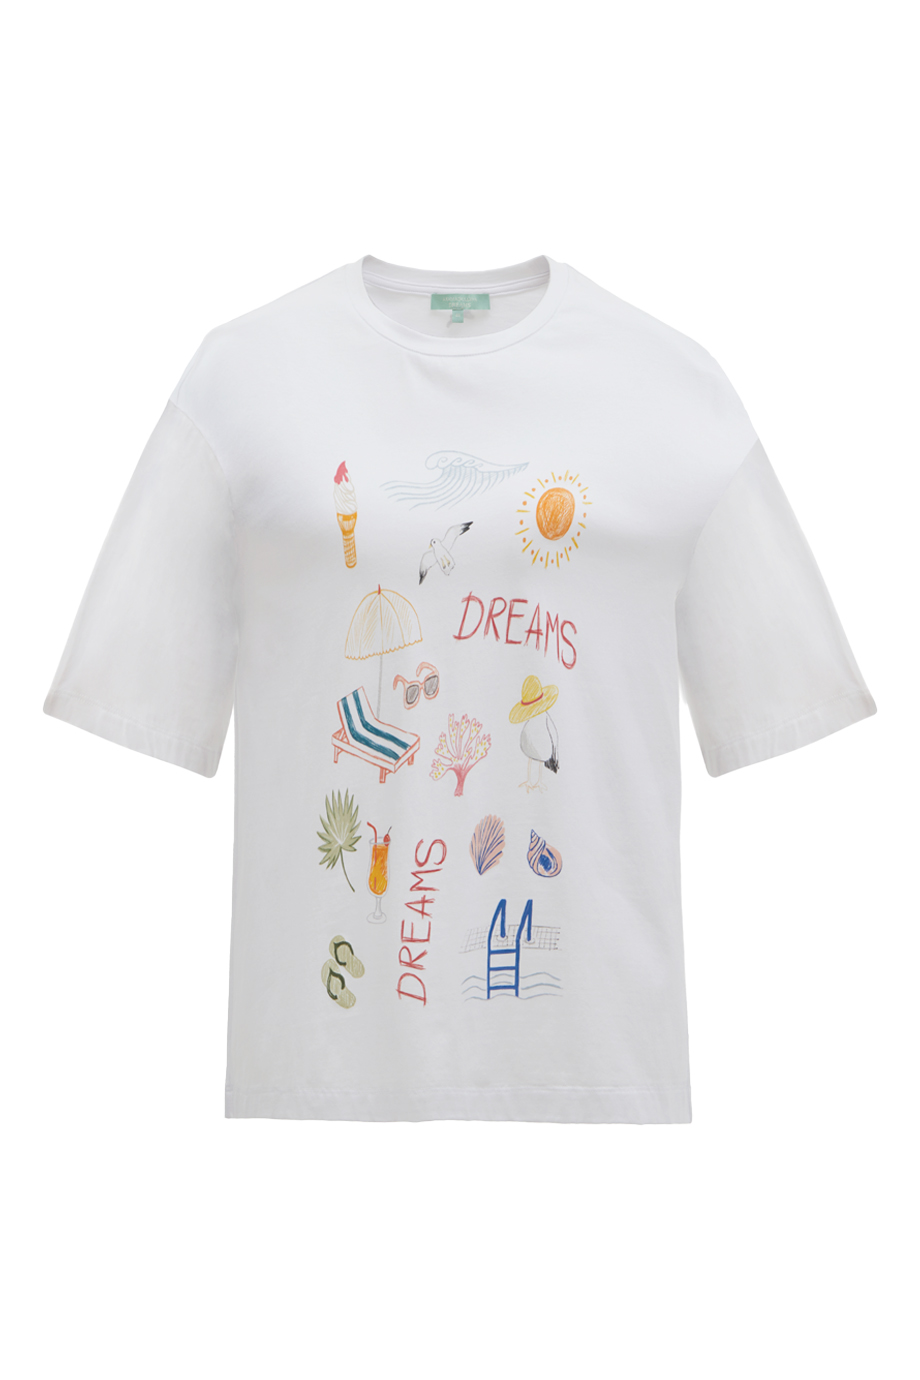 Хлопковая футболка Akhmadullina Dreams, арт. 124103120403539/302000